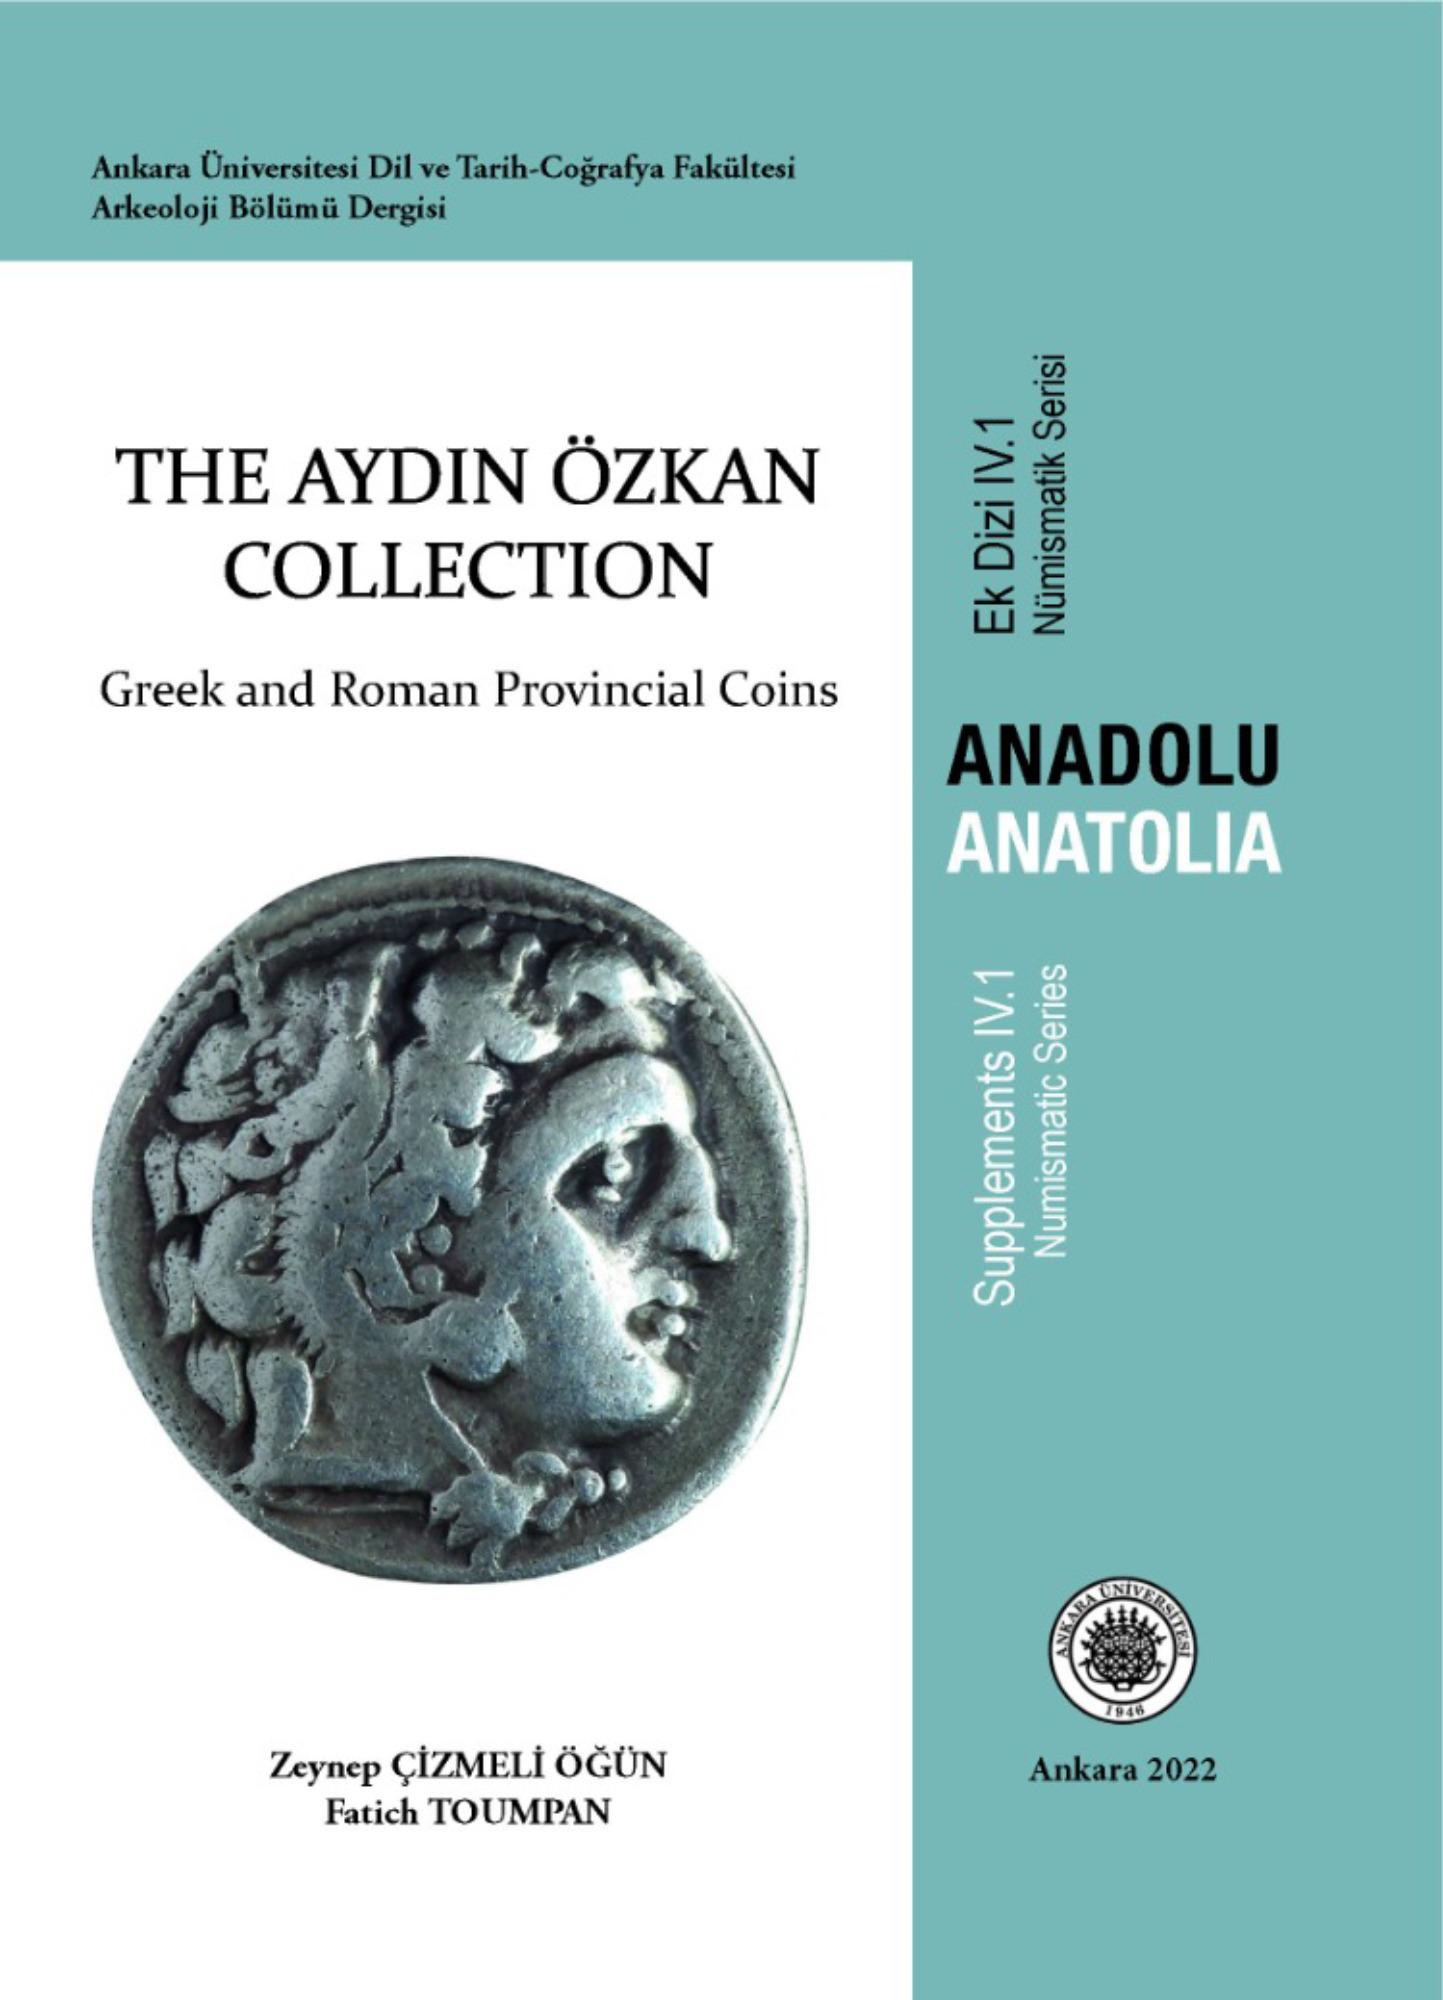 Çizmeli Öğün, Zeynep – Fatich Toumpan (eds.) : The Aydin Özkan Collection. Greek and Roman Provincial Coins	